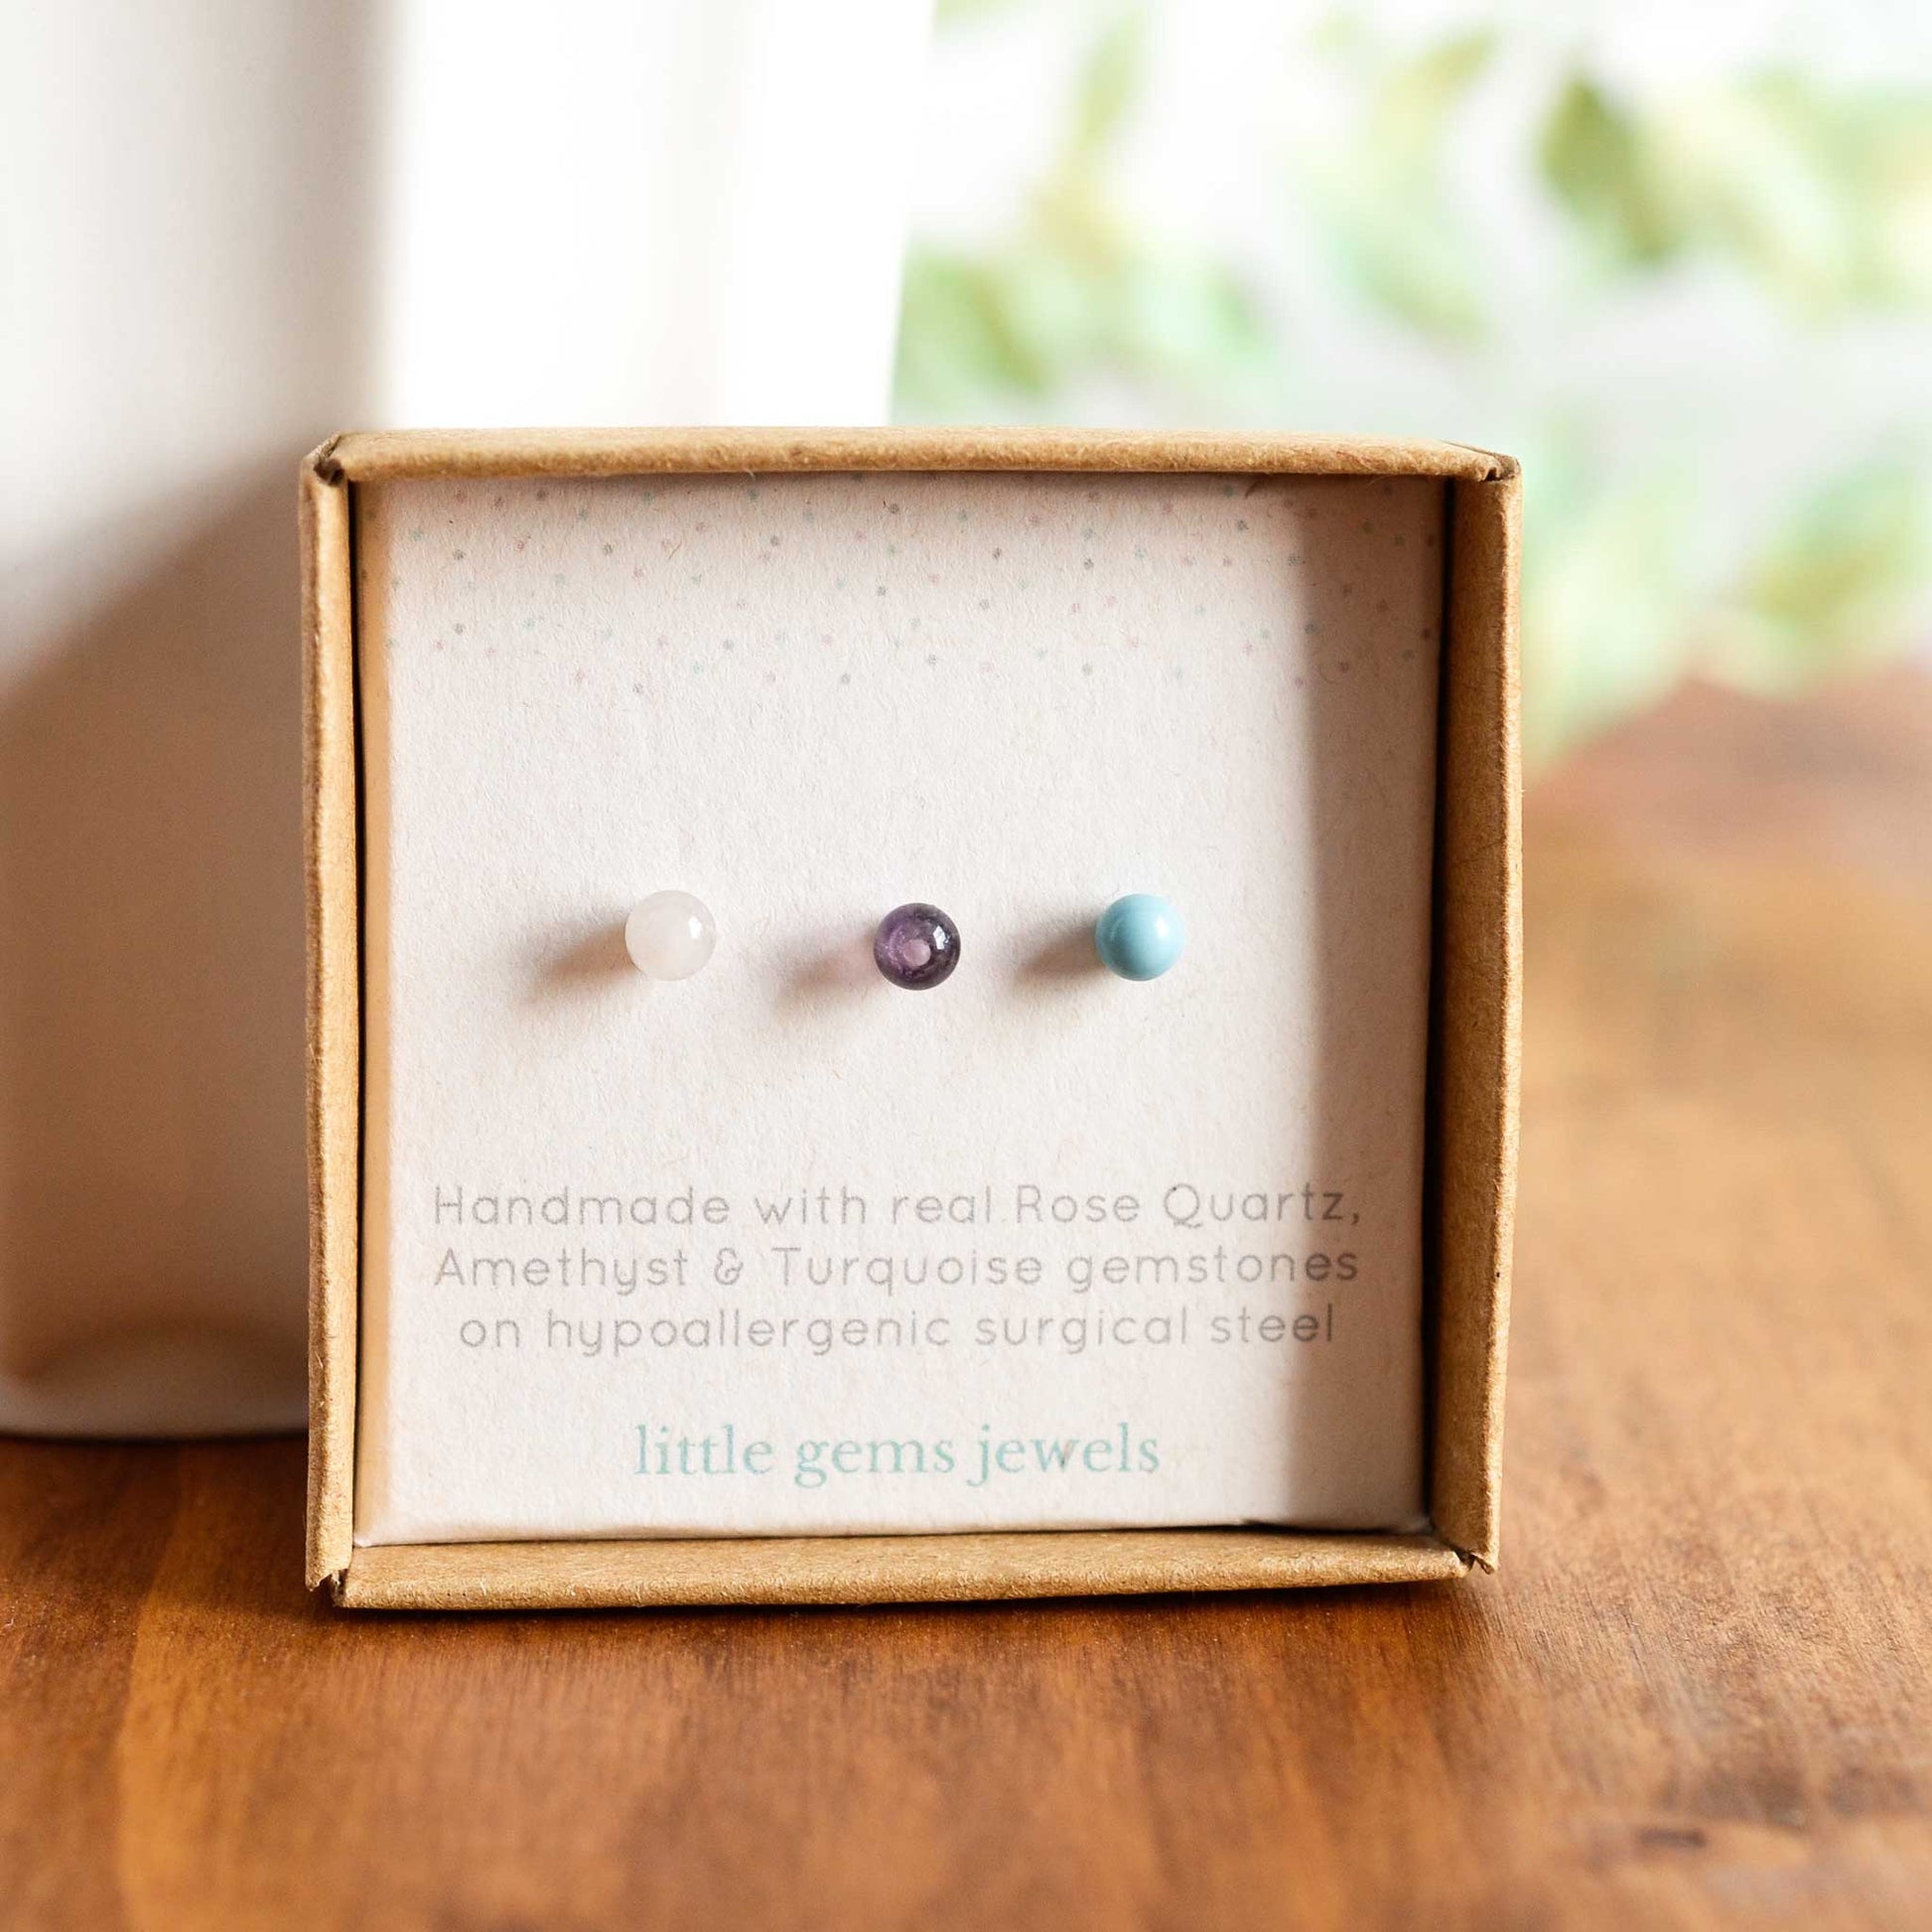 Rose Quartz, Amethyst & Turquoise single stud earrings in eco friendly gift box